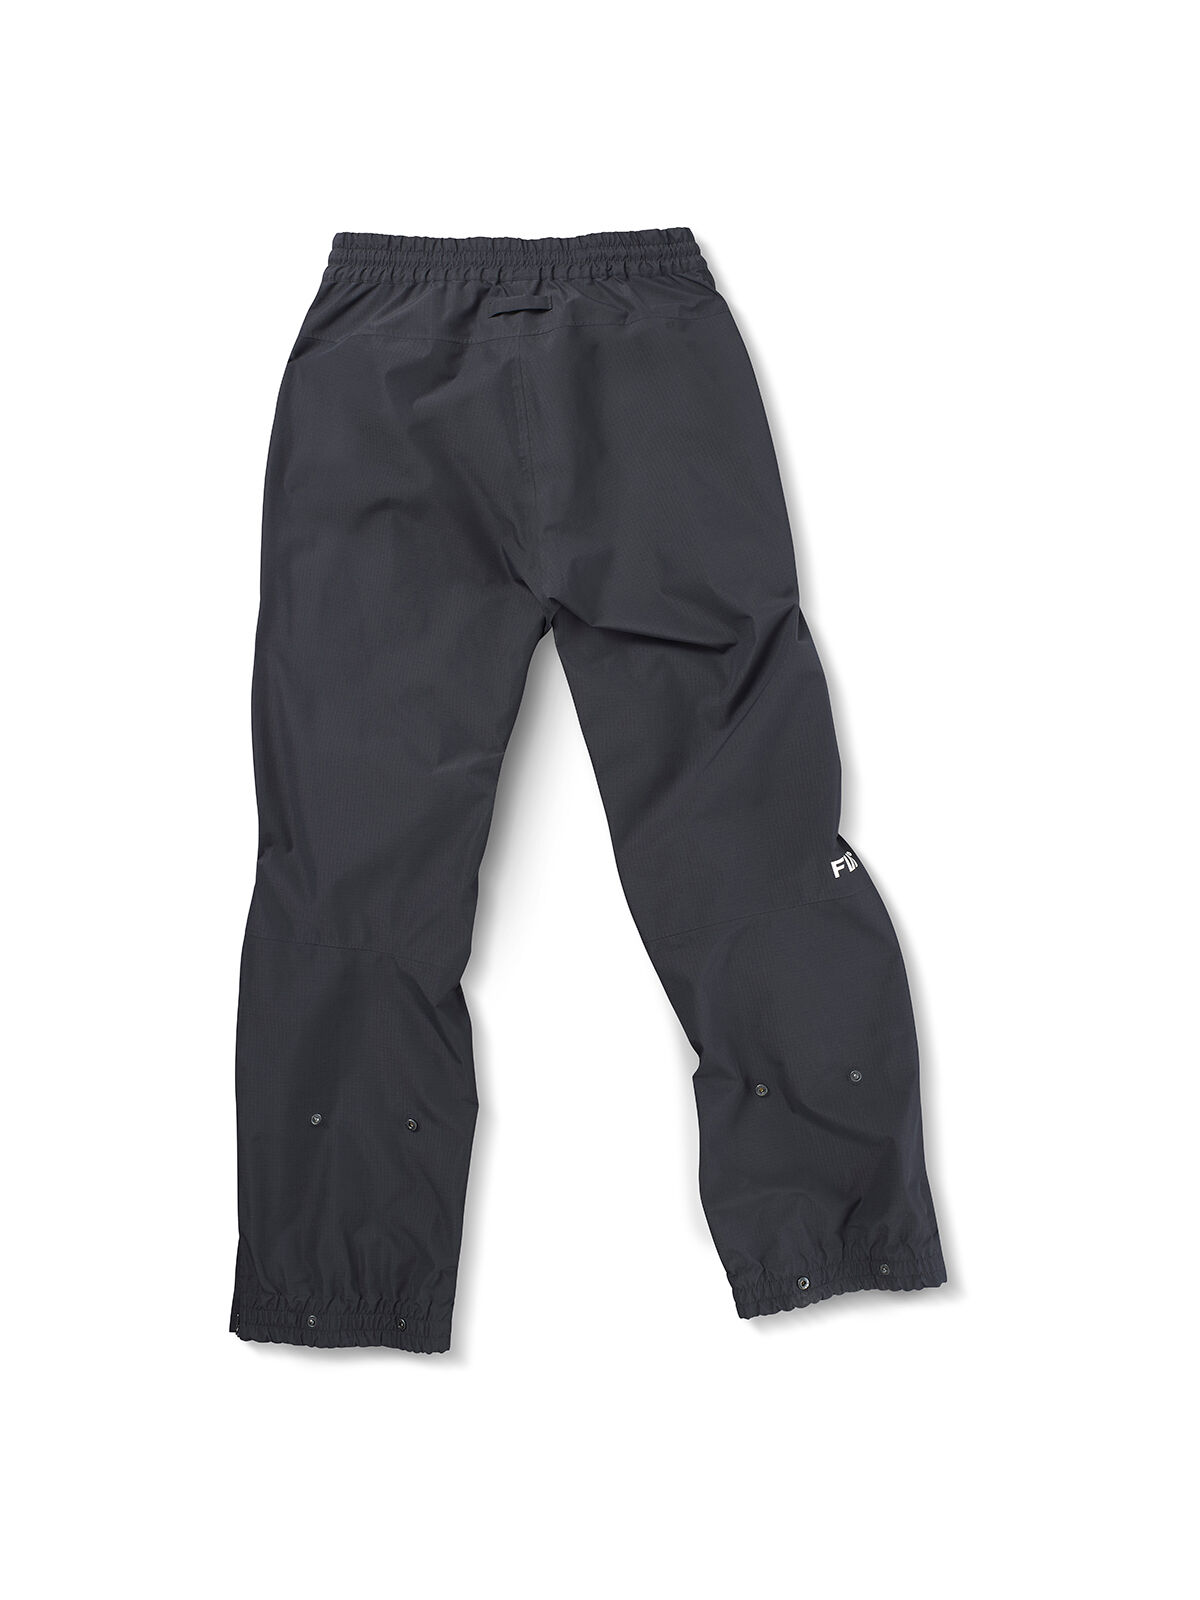 FW Apparel Root Light 2.5L Pant - Ski pants - Men's